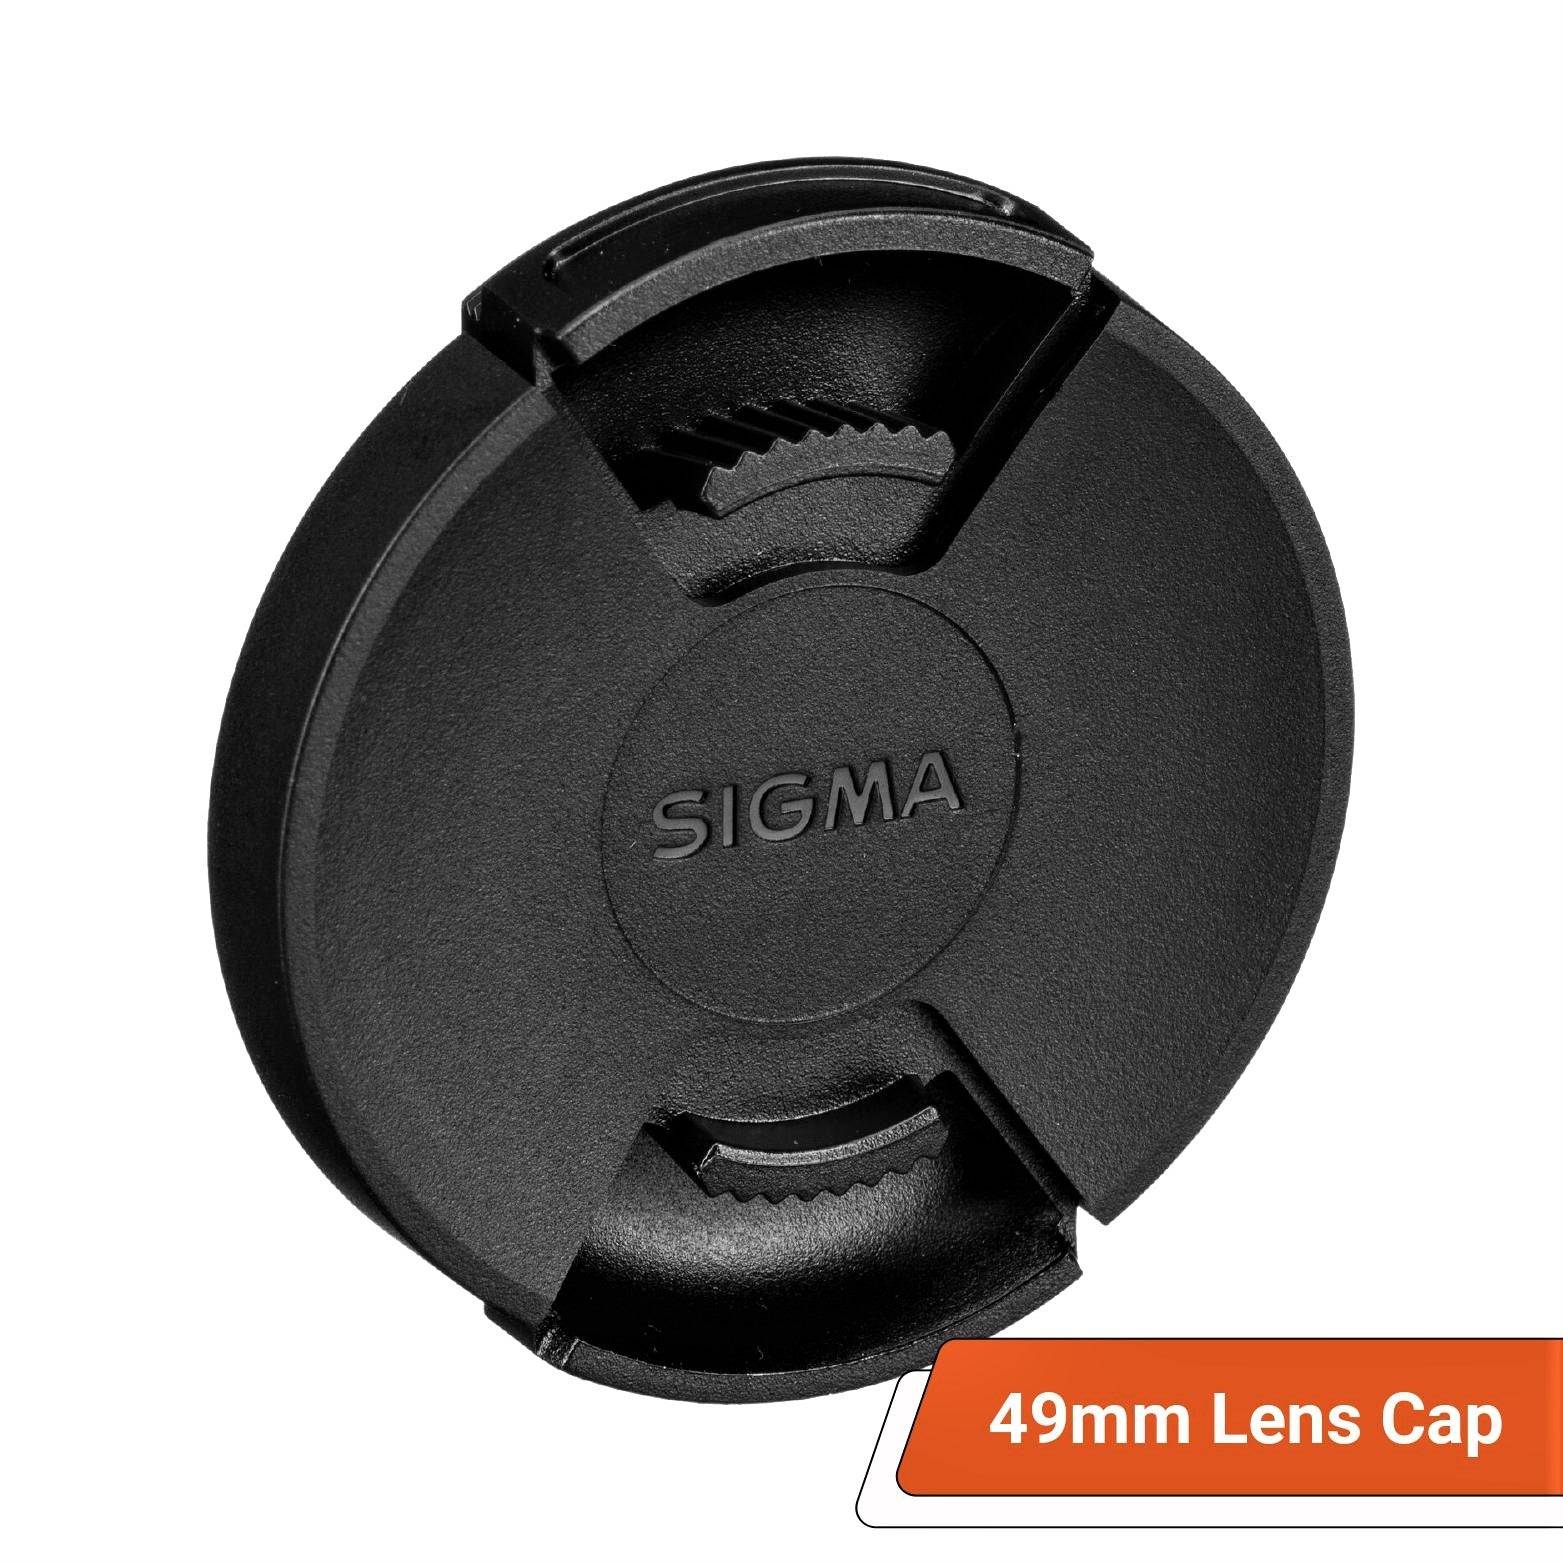 Sigma LCF-49 III 49mm Lens Cap